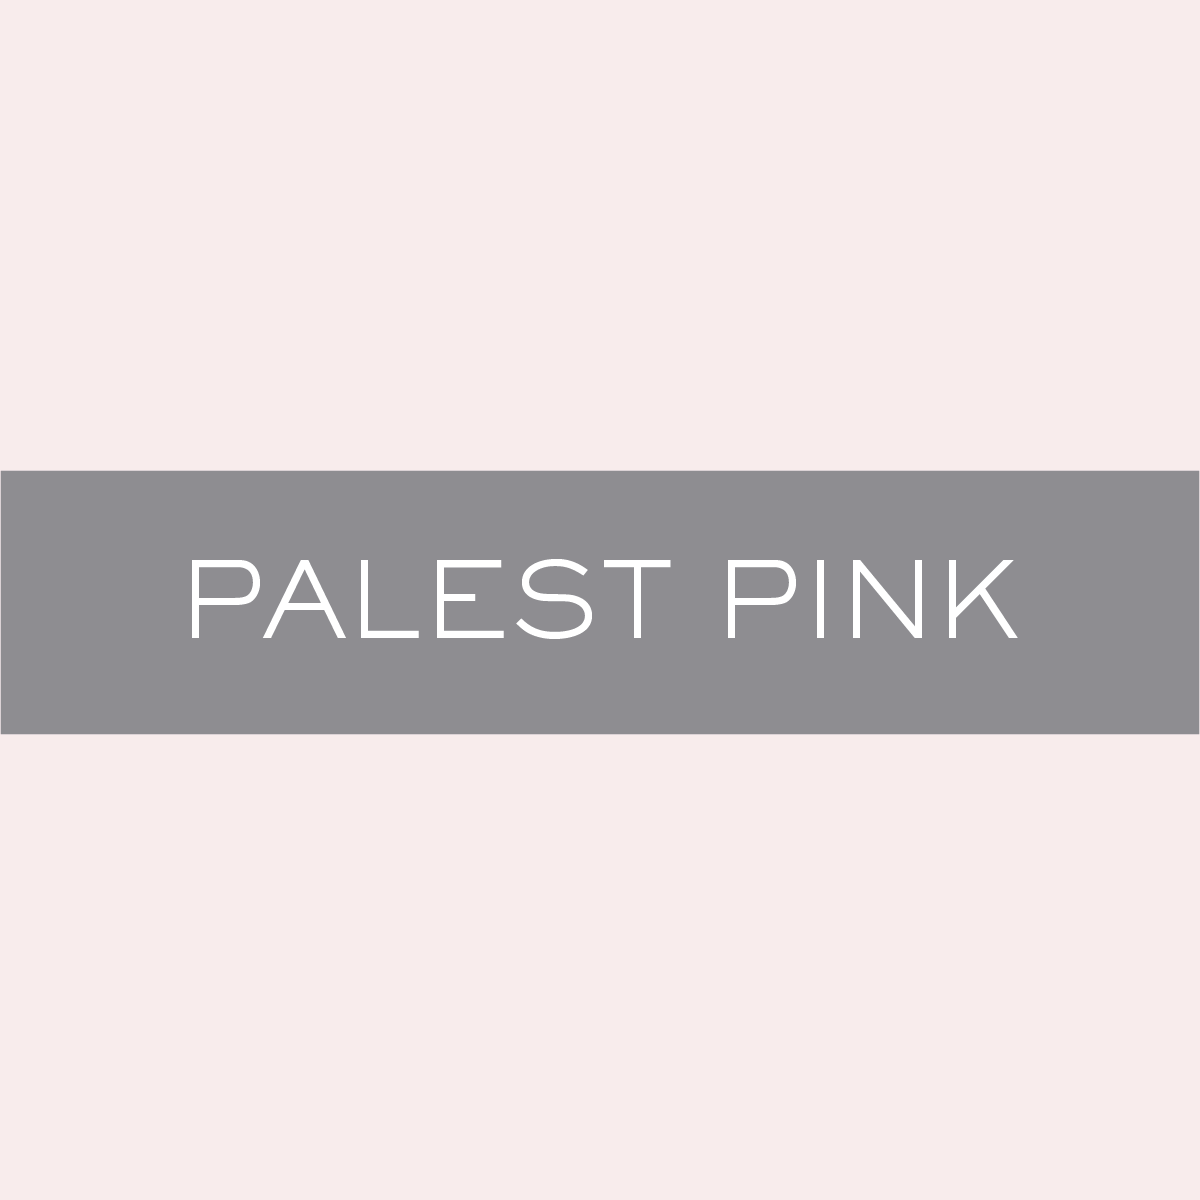 INK_Palest_Pink.png